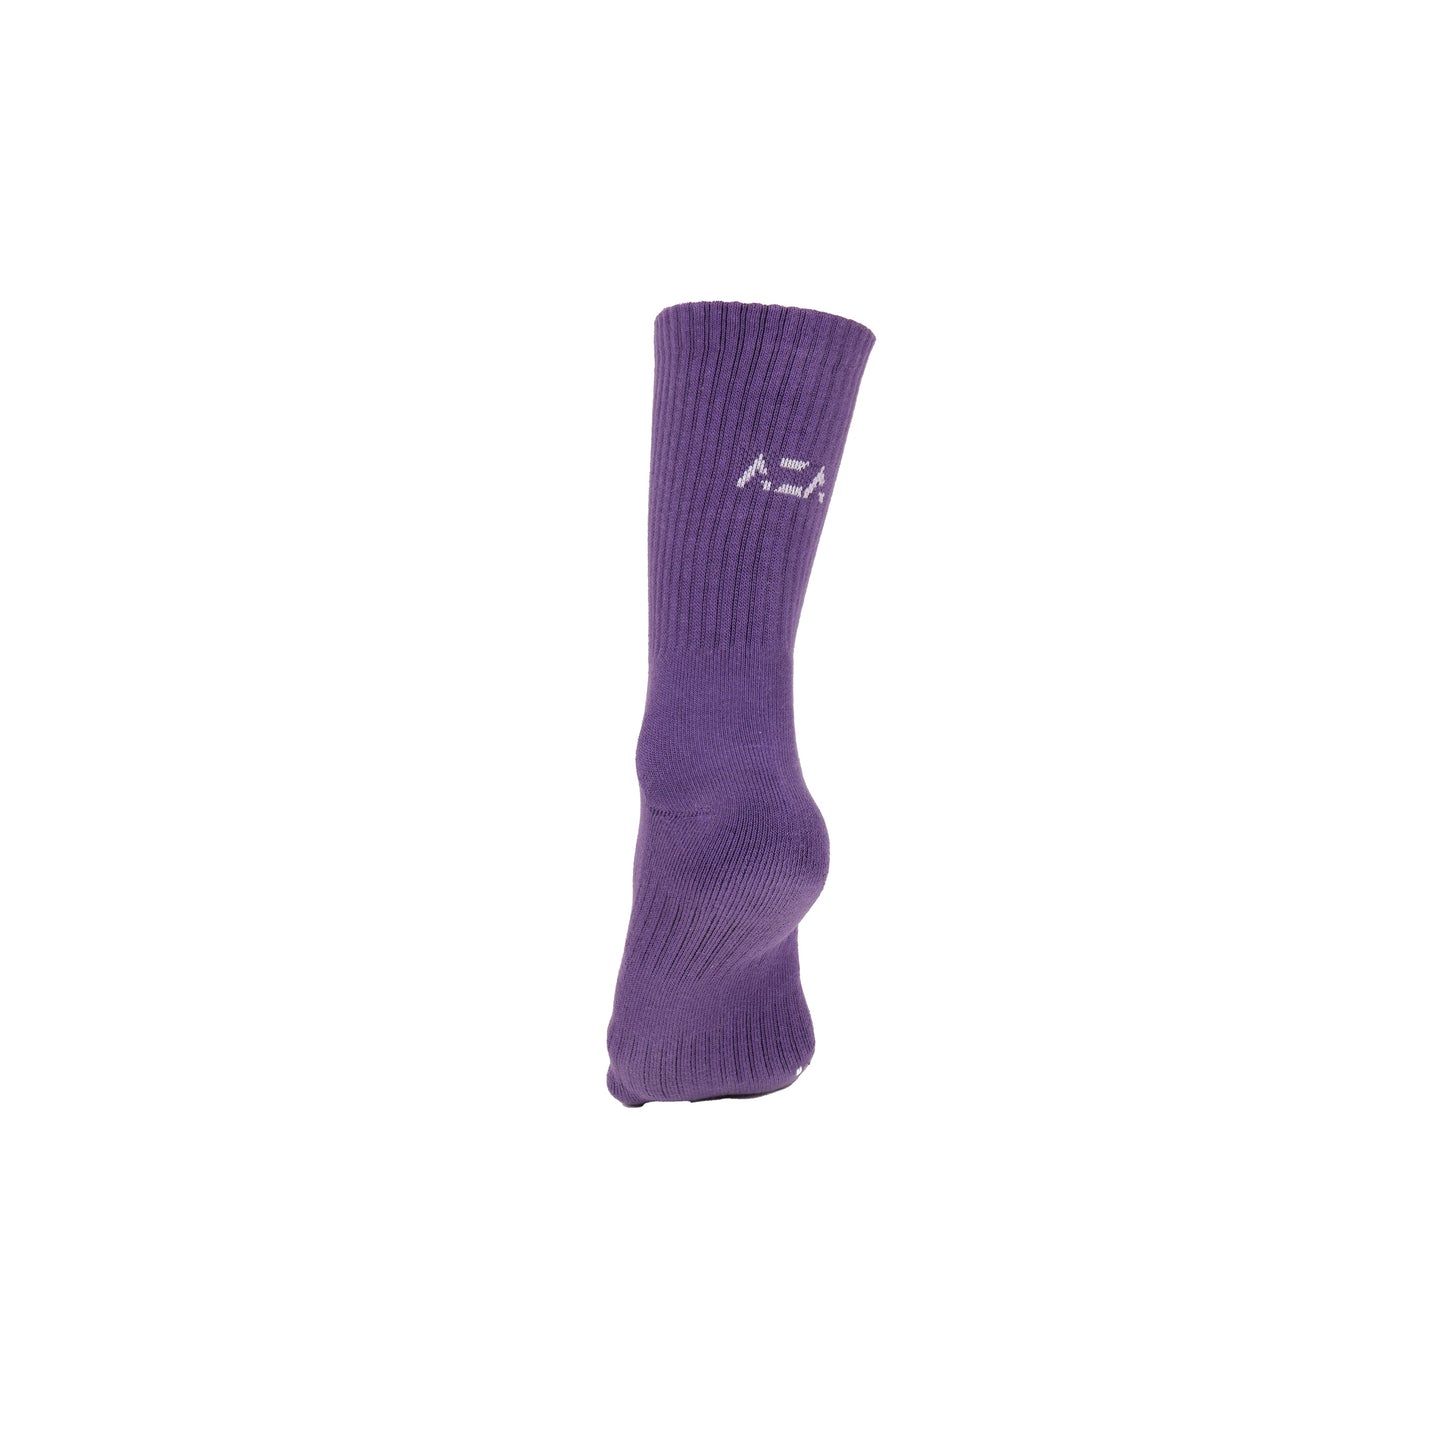 AZA Socks Colorful Edition - Violet